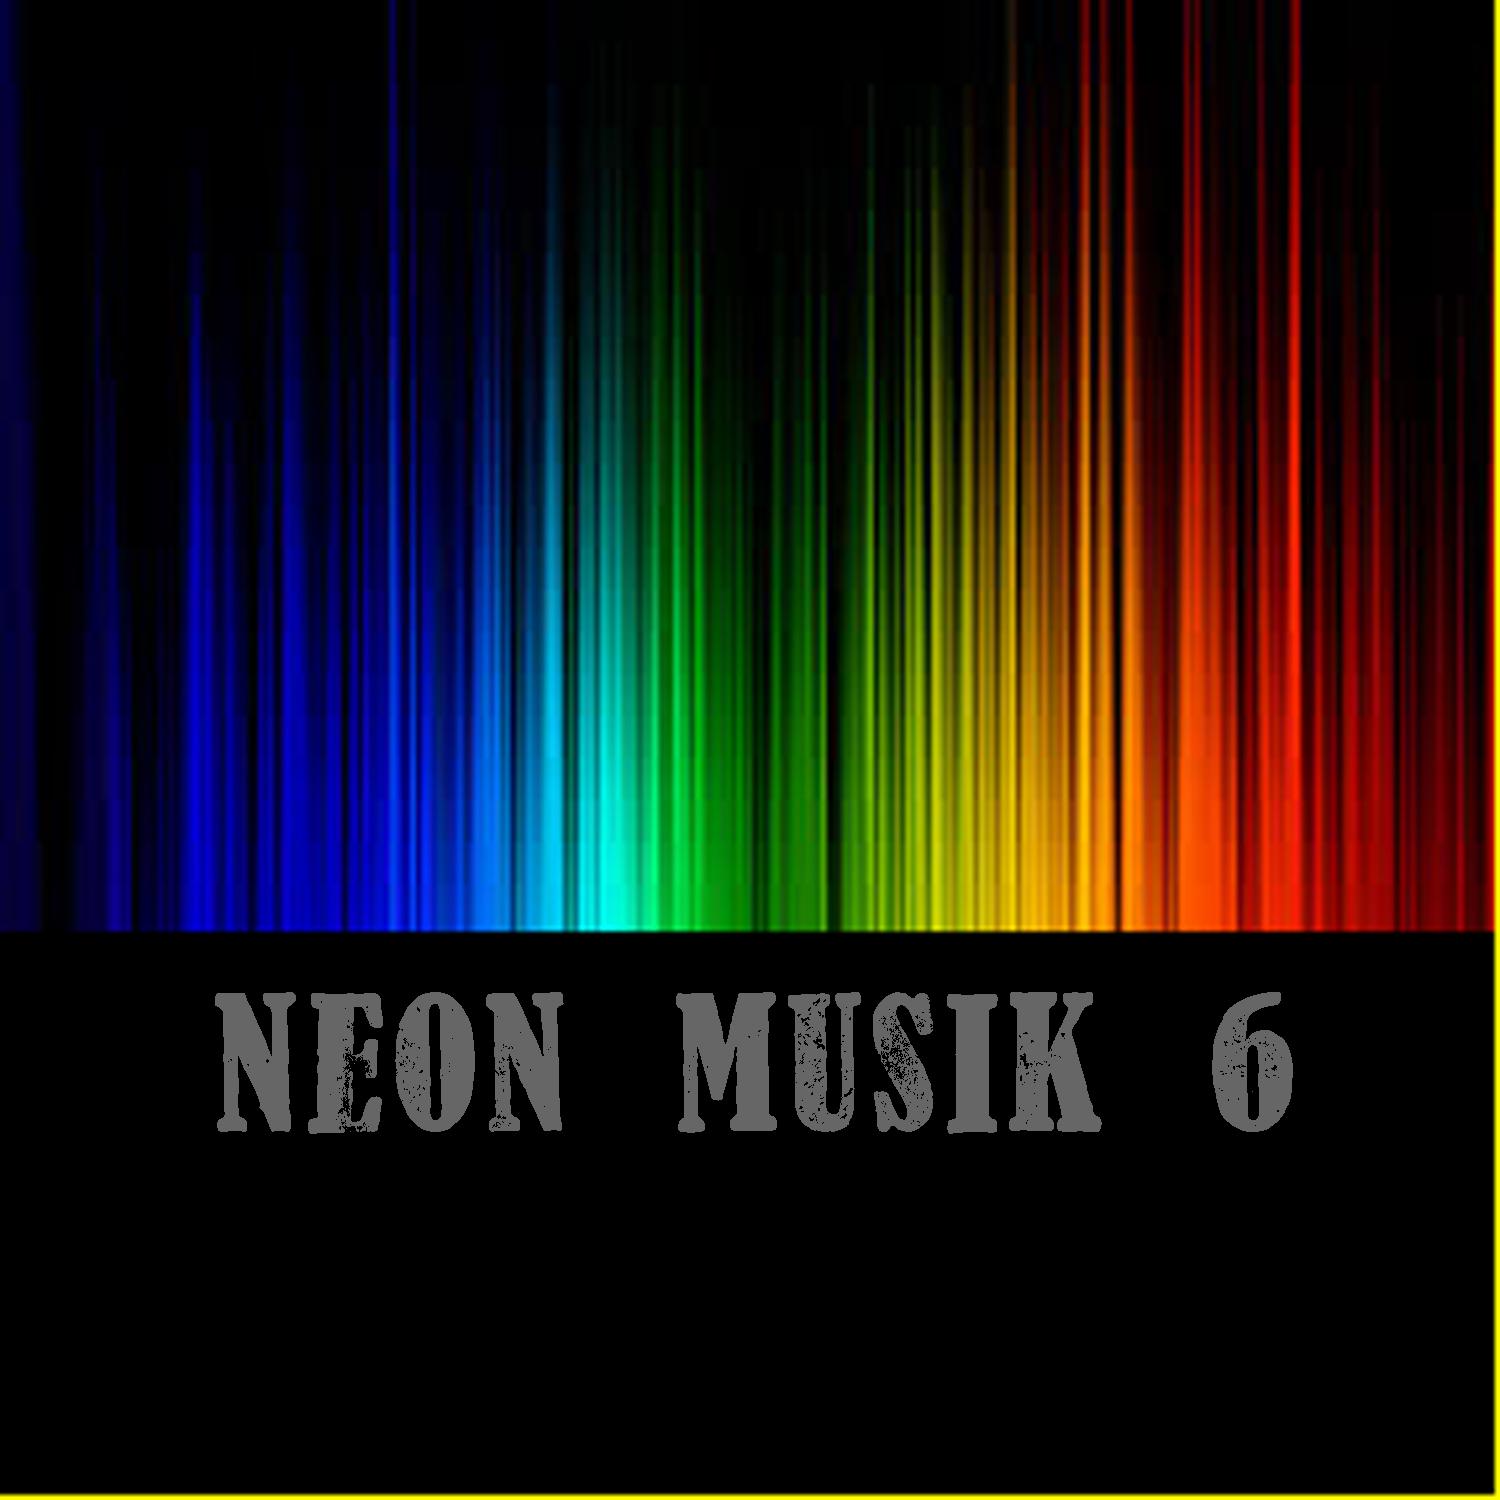 Neon Musik 6